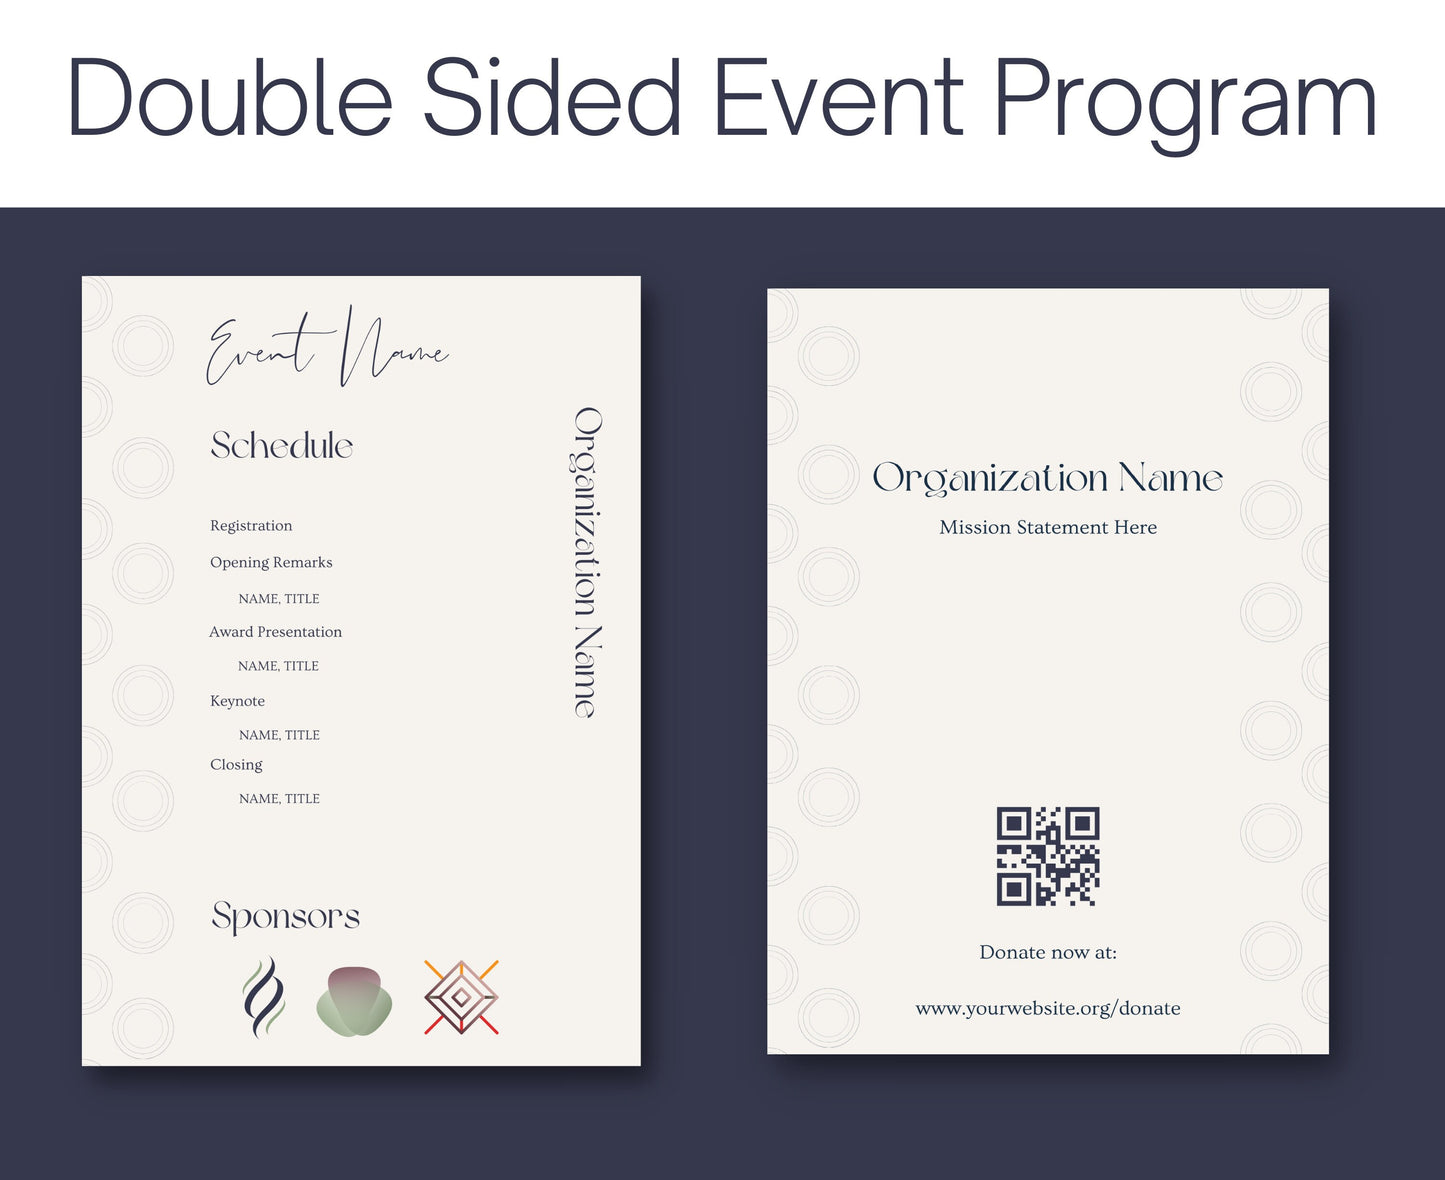 Event Invitation and Program